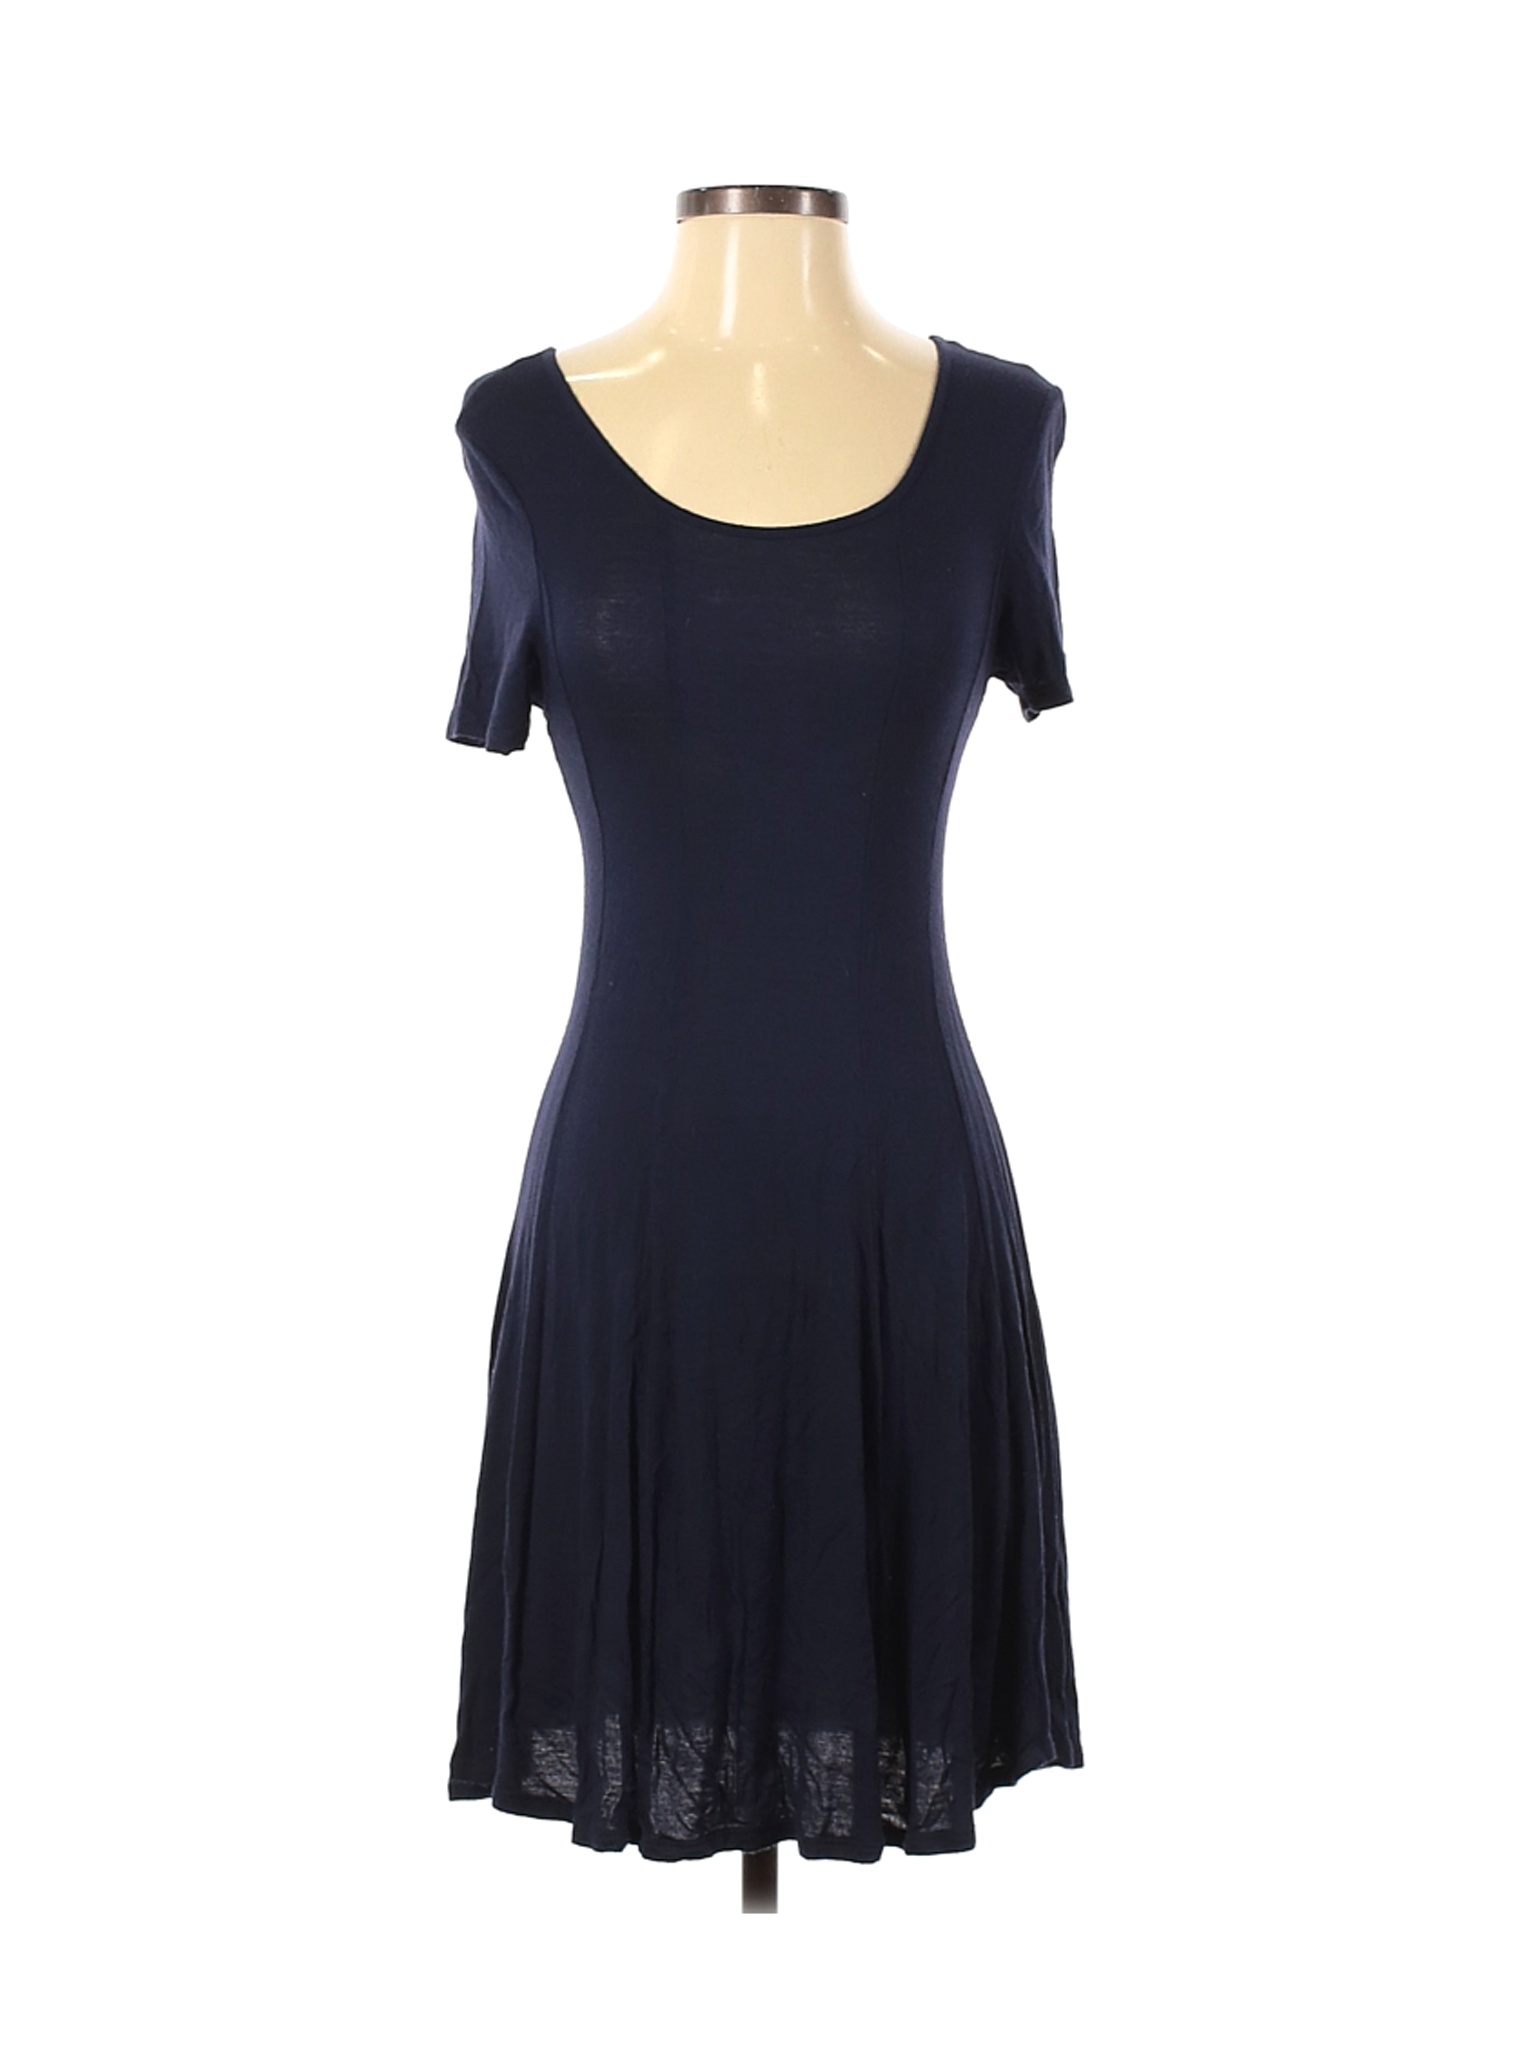 Zenana Outfitters Women Blue Casual Dress S | eBay